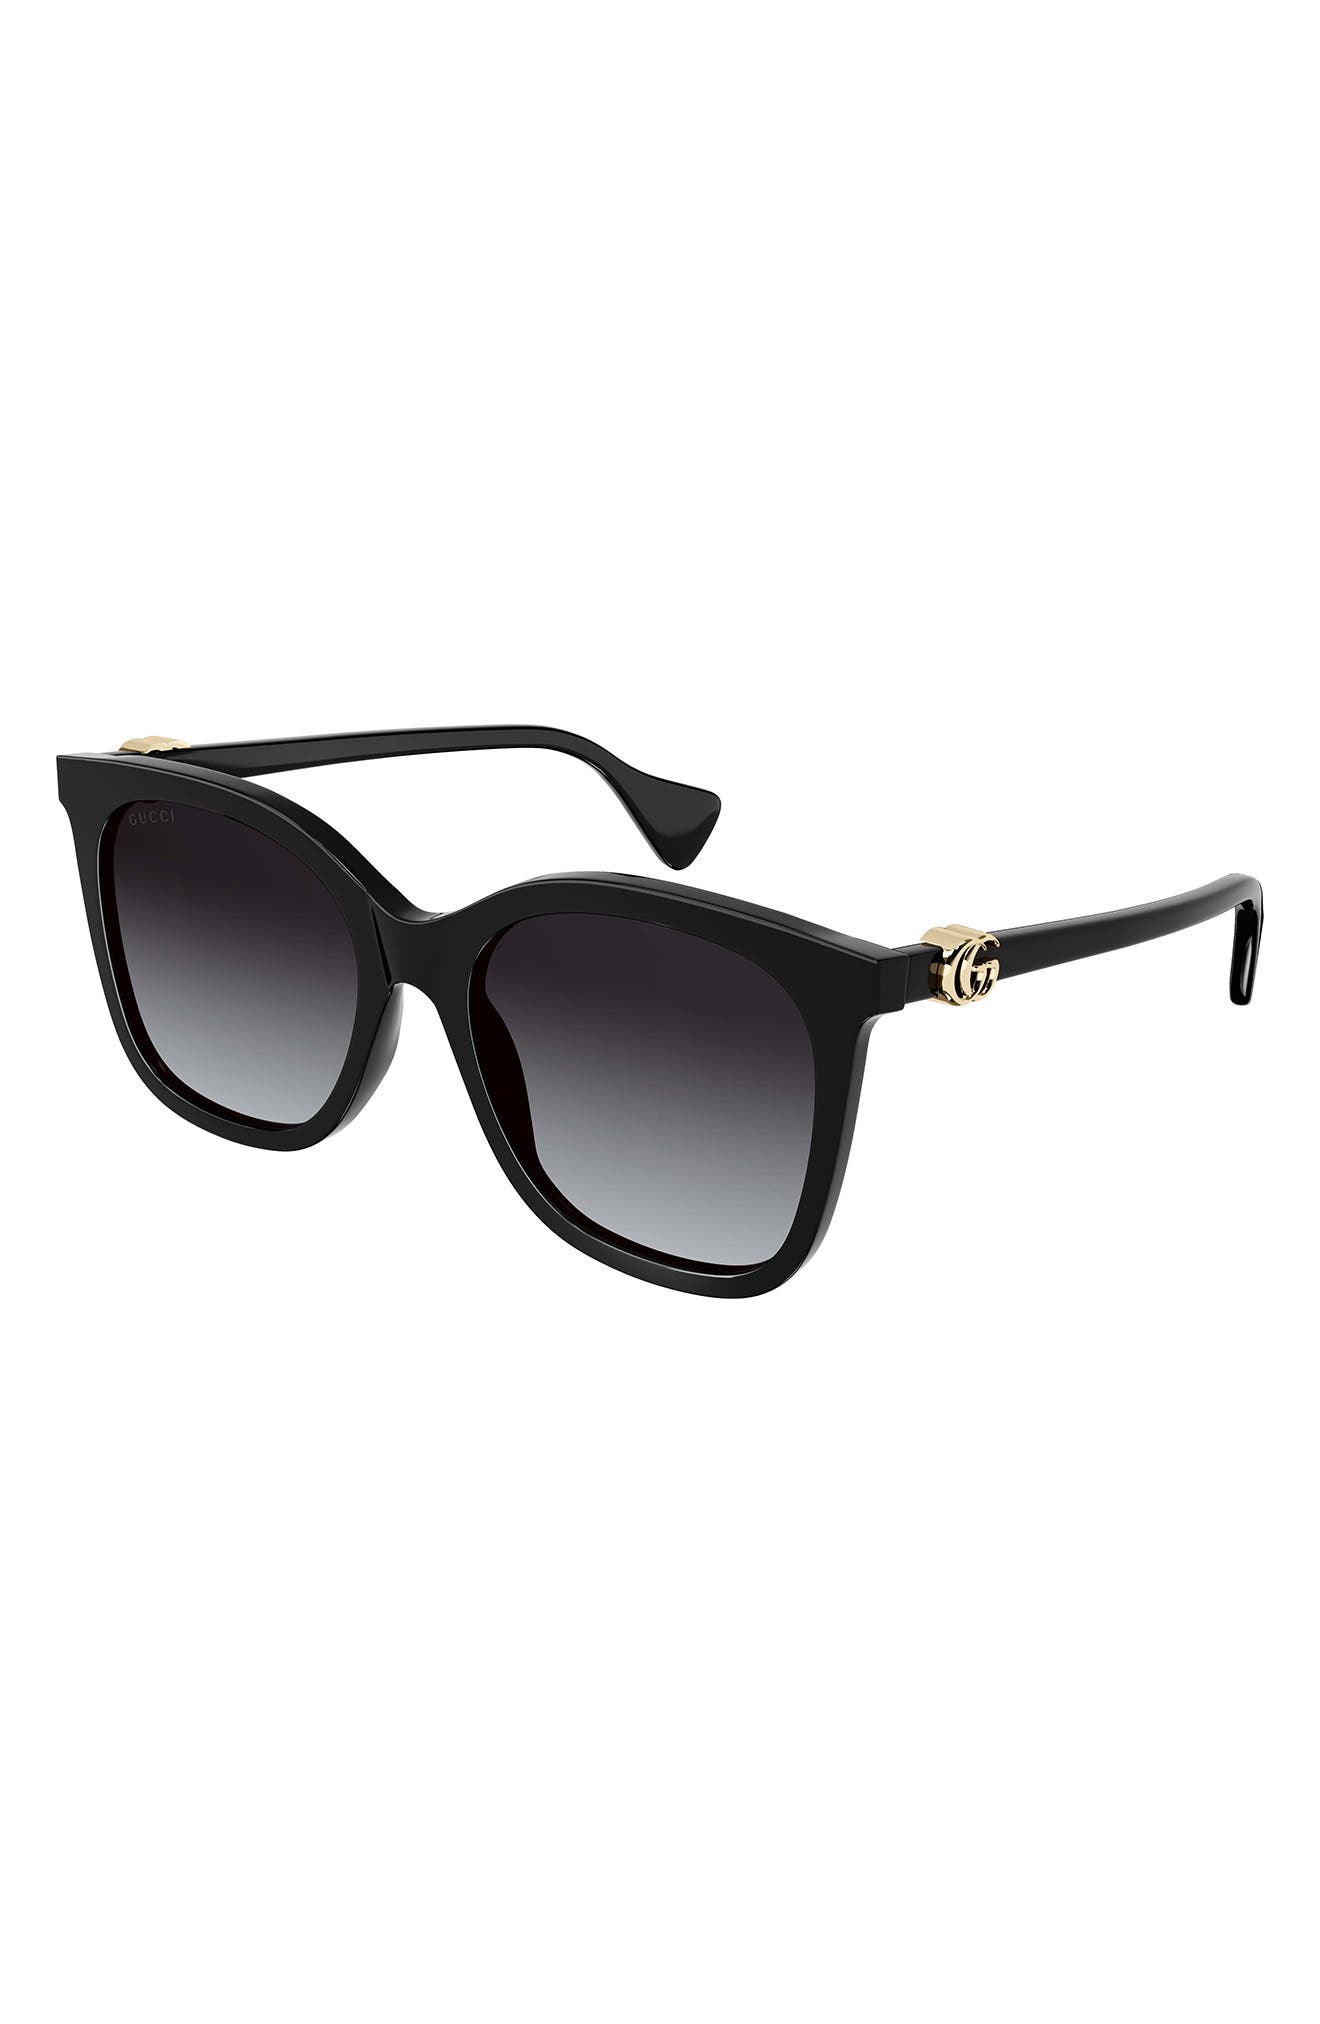 New Trending Eyeglasses Womens Designer Bag Shades Black Handbag Sunglasses 